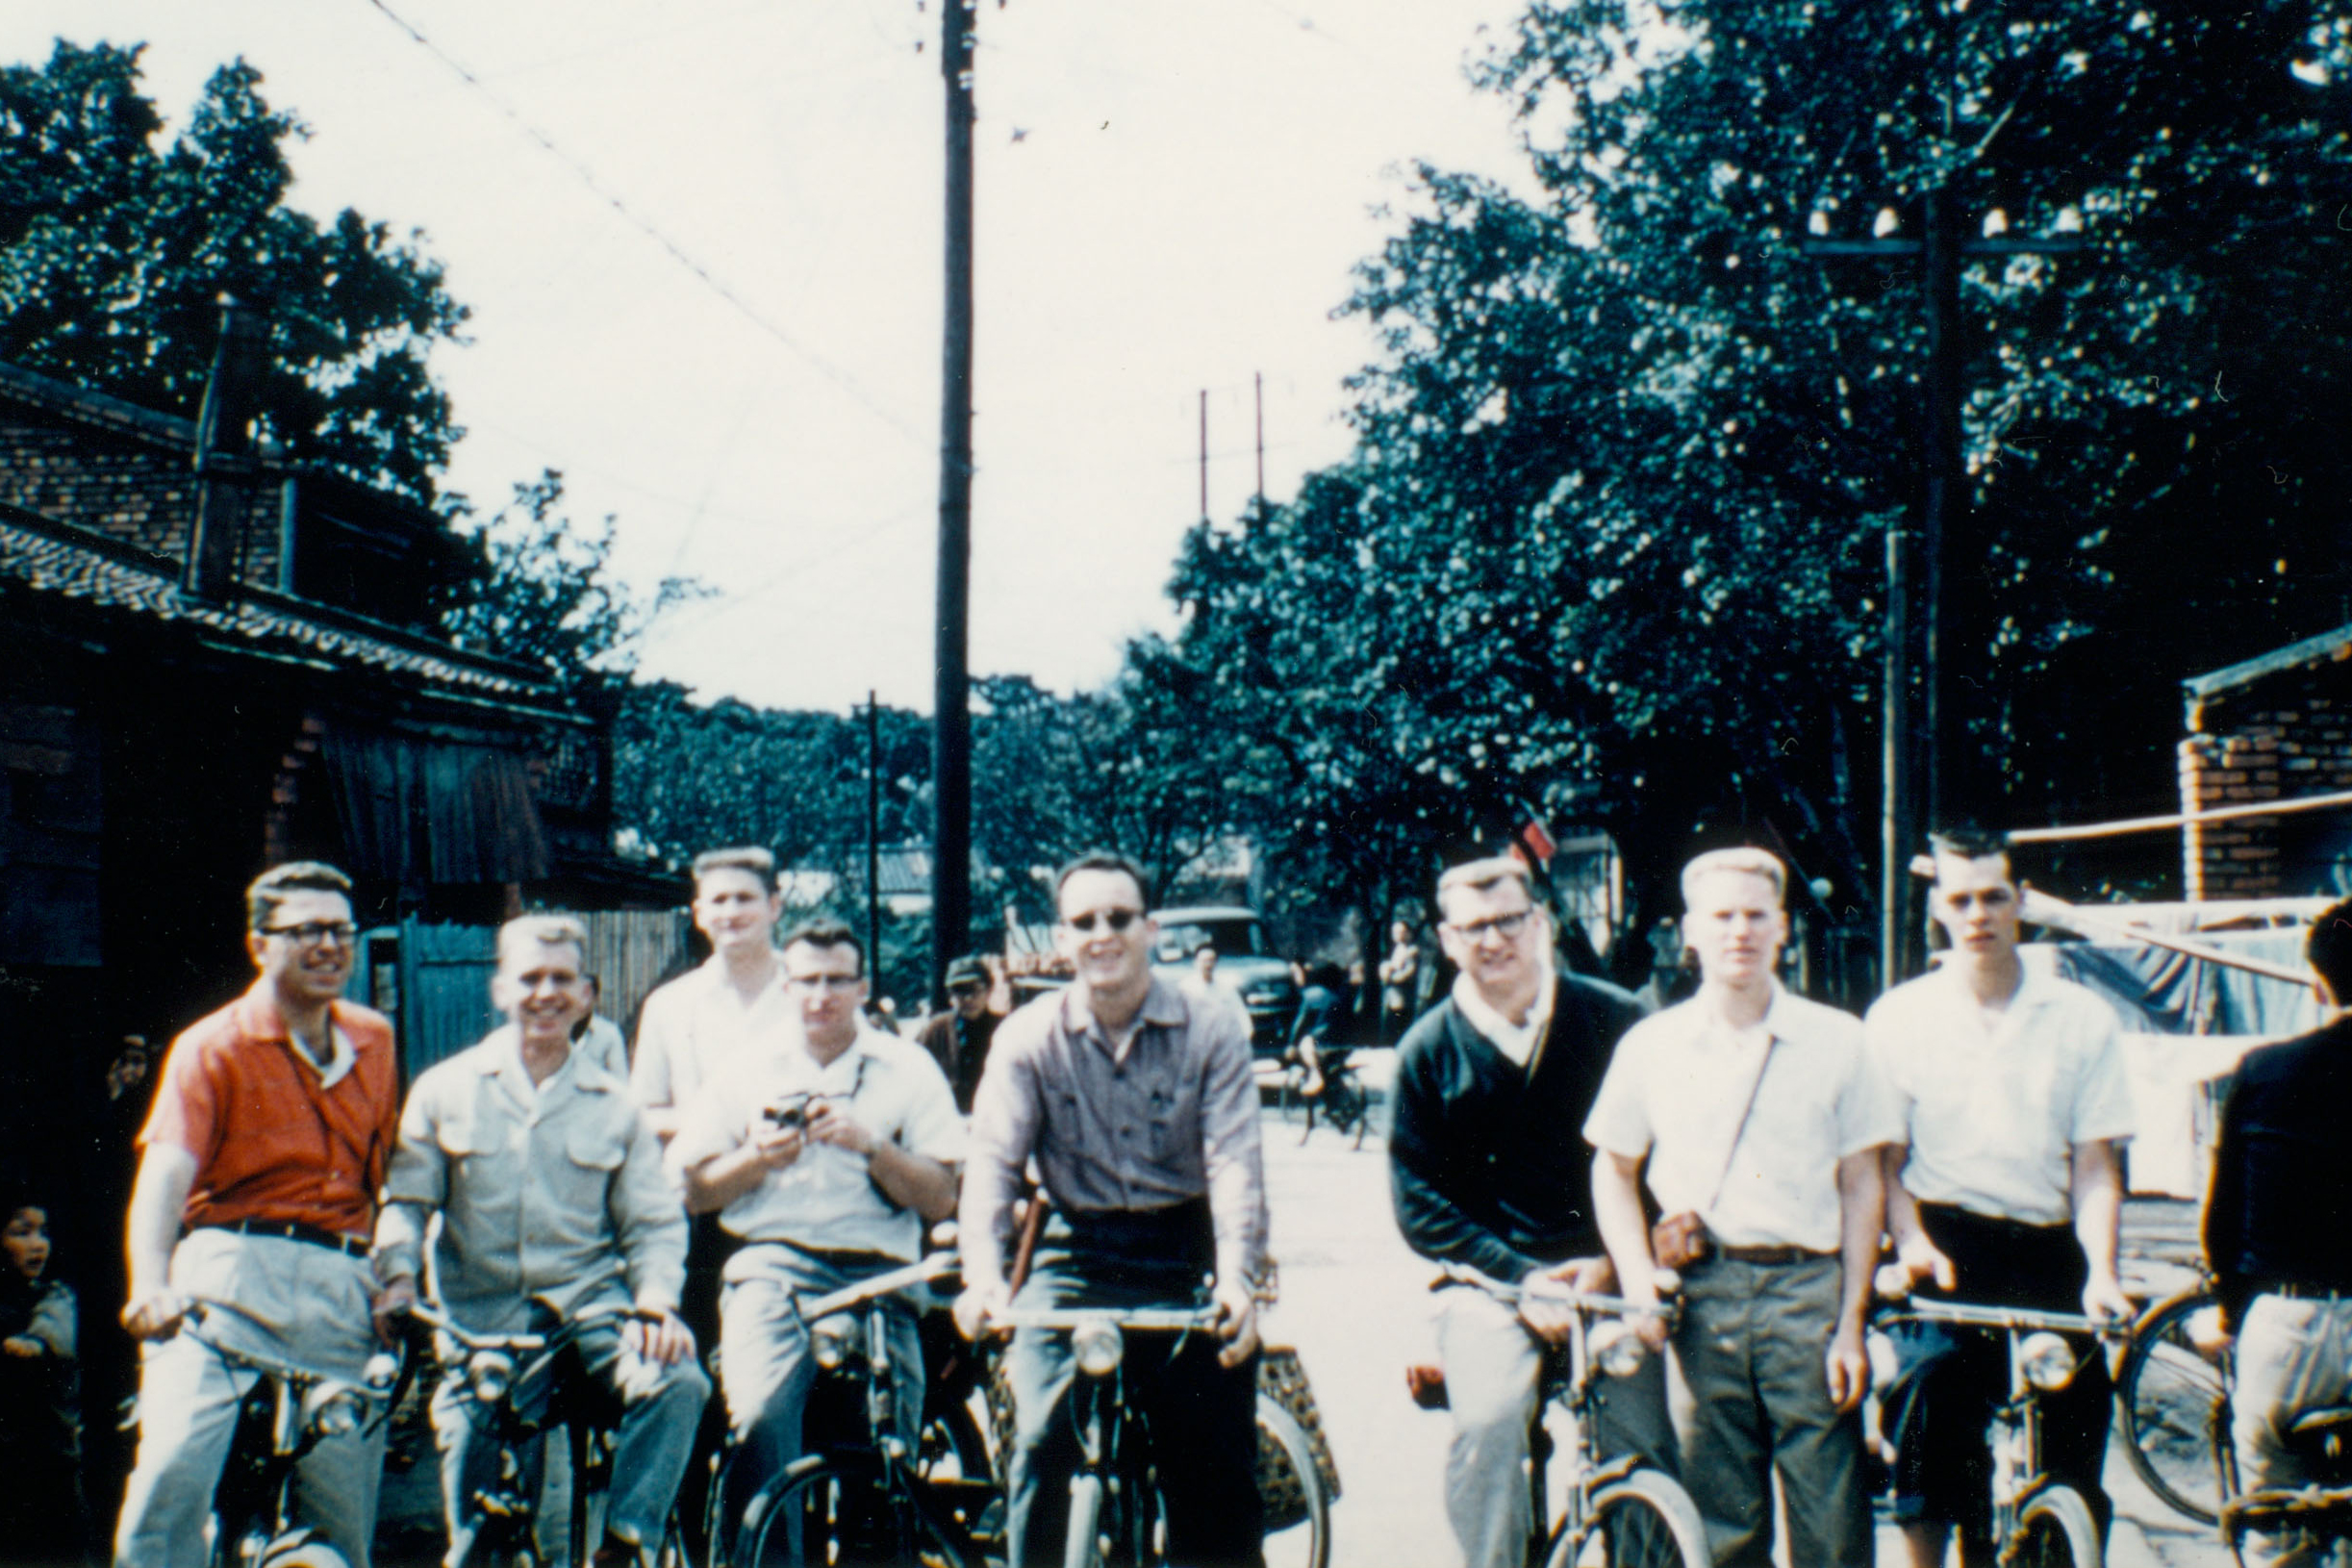 Eight missionaries biking in 1957